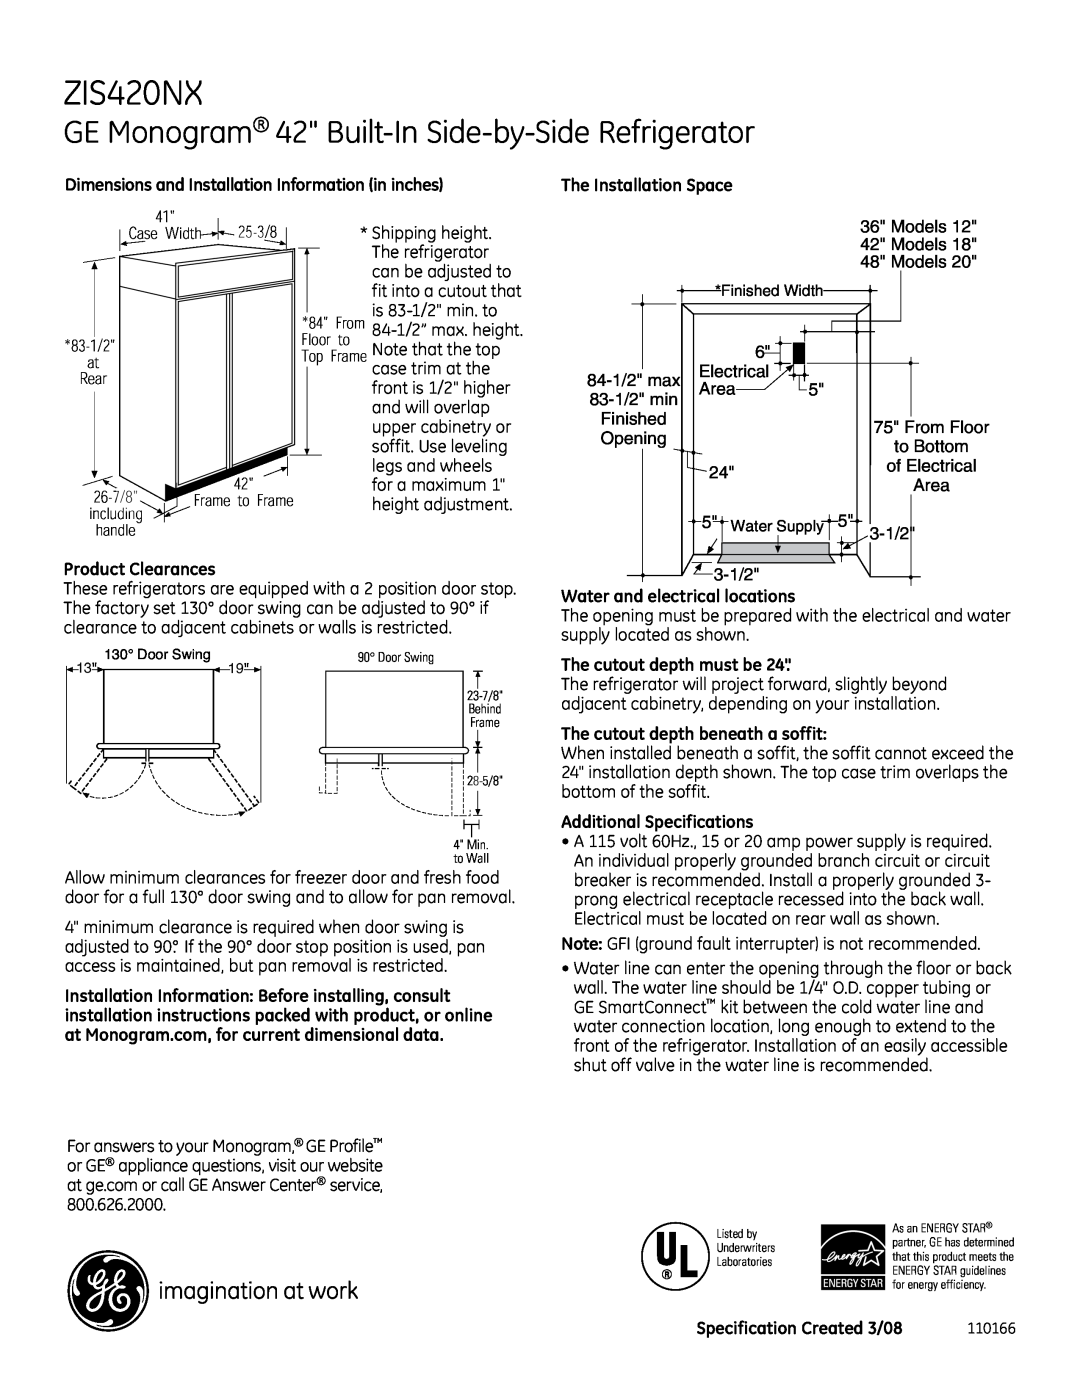 GE Monogram ZIS420NX dimensions GE Monogram 42 Built-In Side-by-Side Refrigerator, The Installation Space 